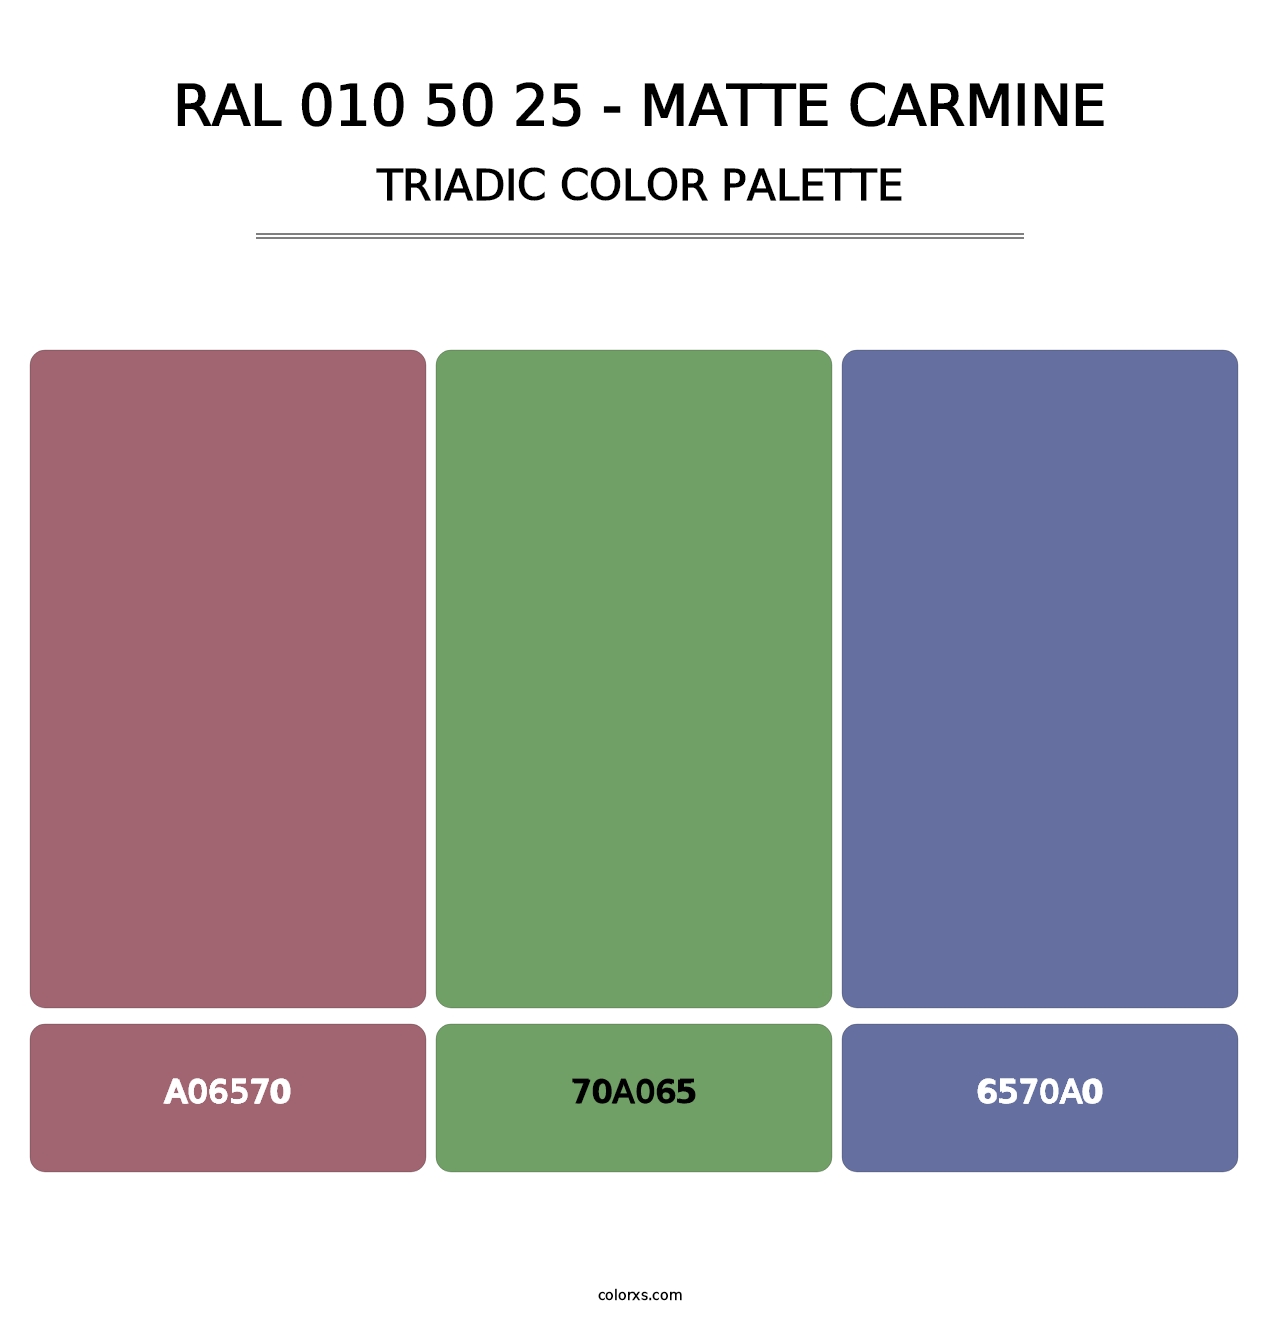 RAL 010 50 25 - Matte Carmine - Triadic Color Palette